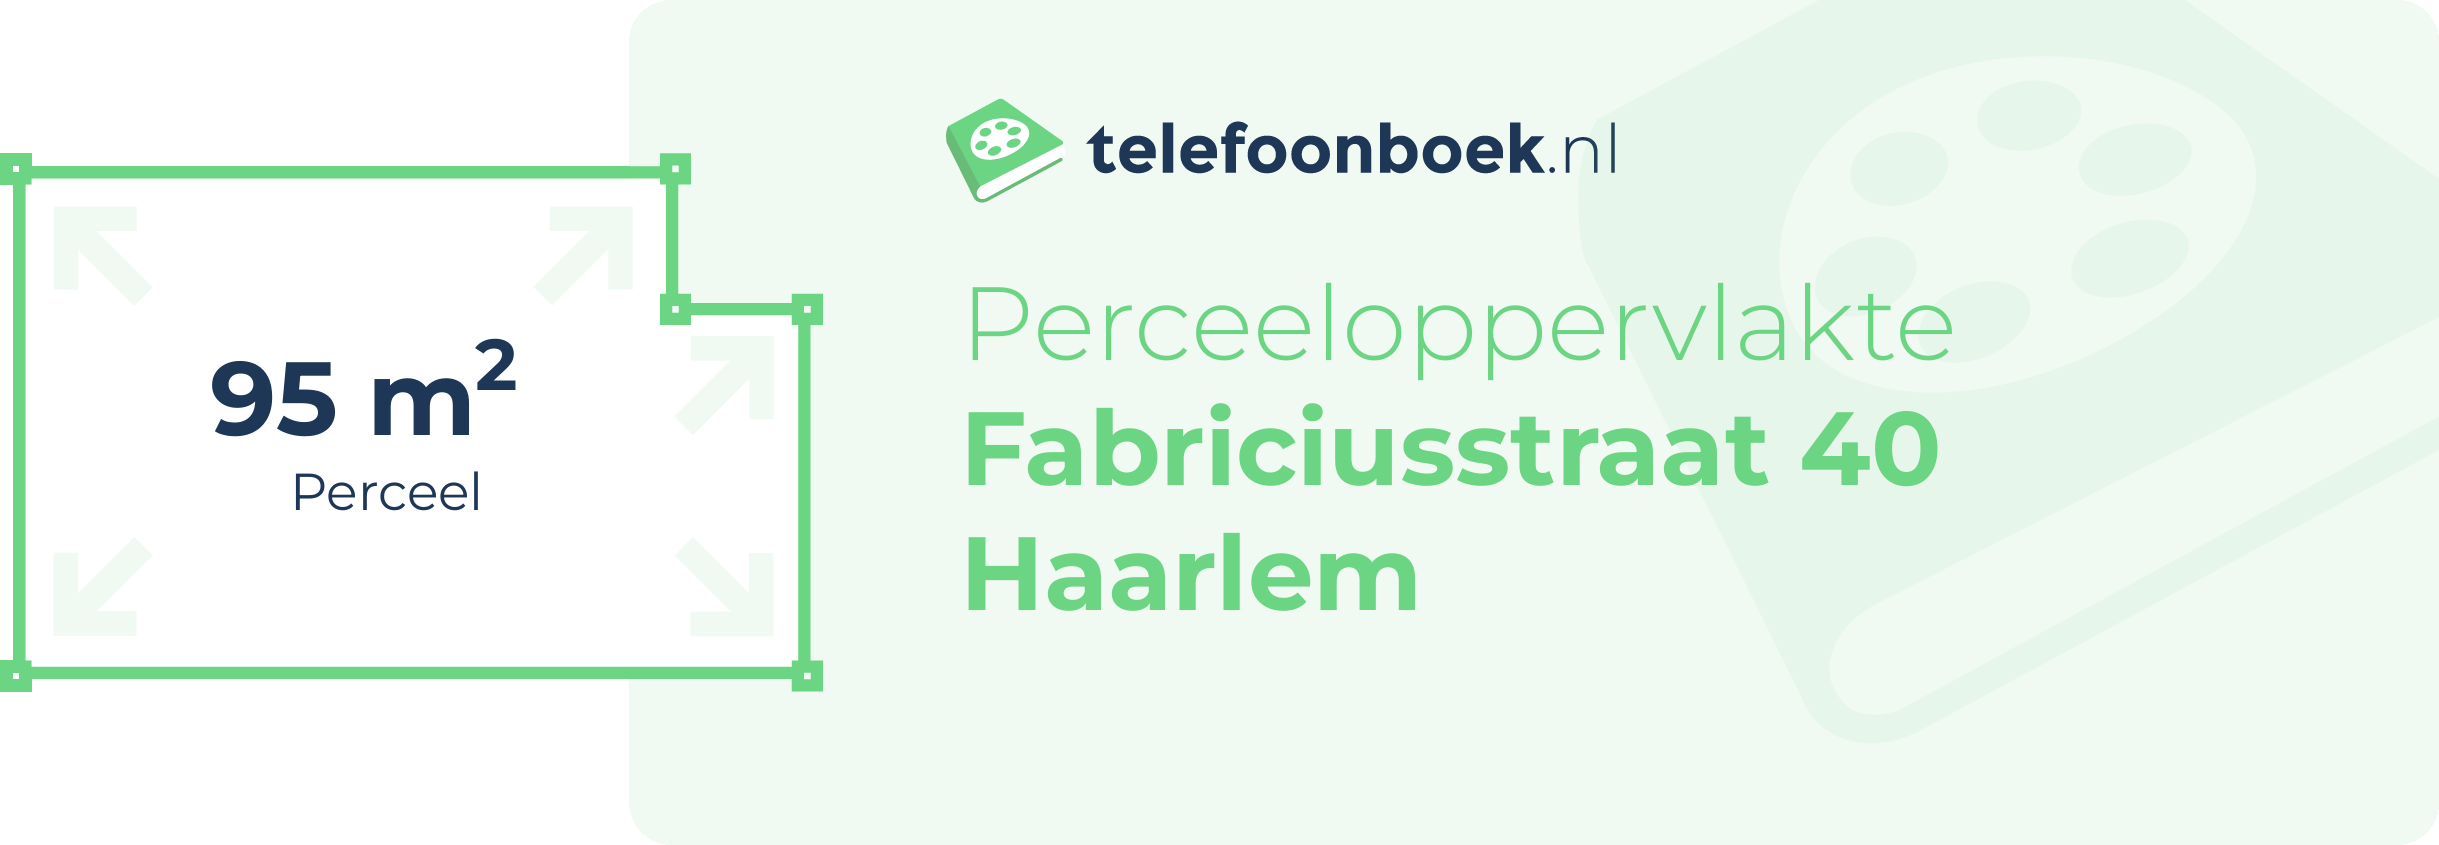 Perceeloppervlakte Fabriciusstraat 40 Haarlem